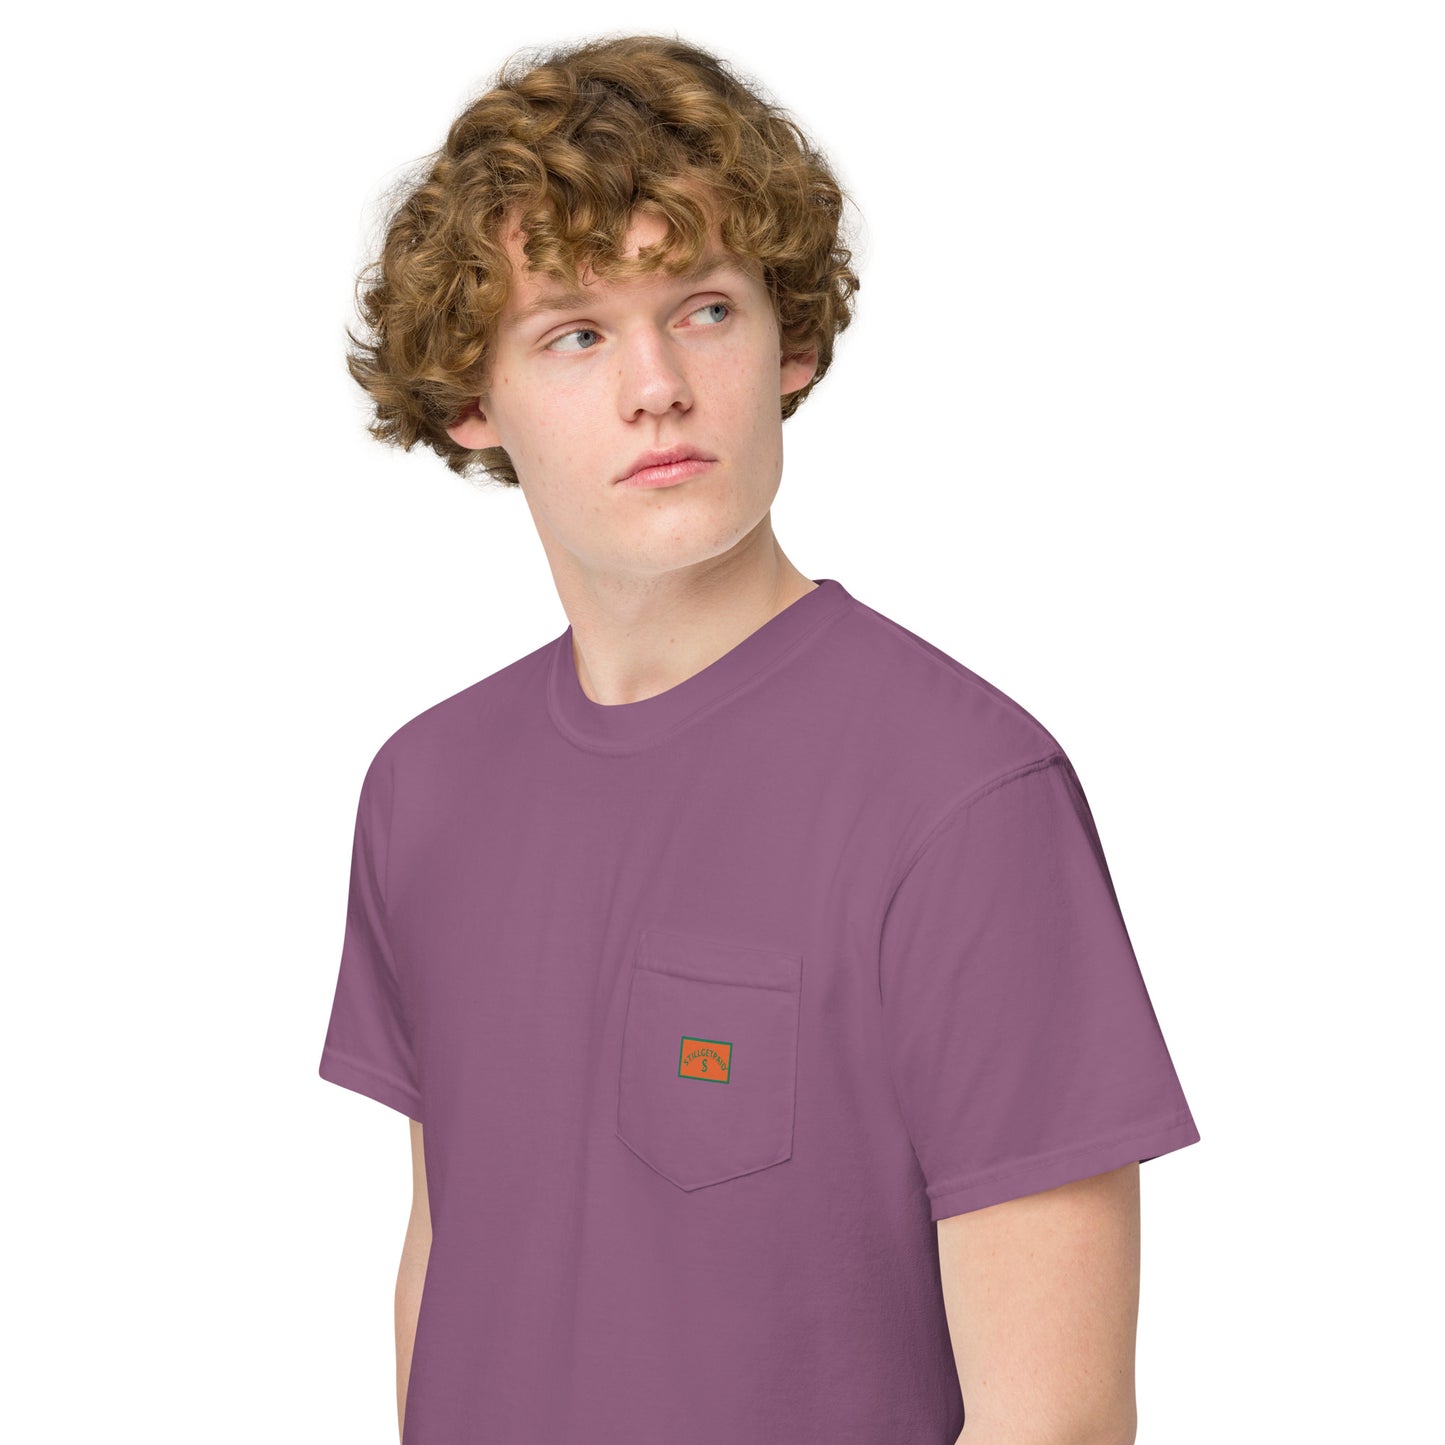 STILLGETPAID® APPAREL Unisex garment-dyed pocket t-shirt